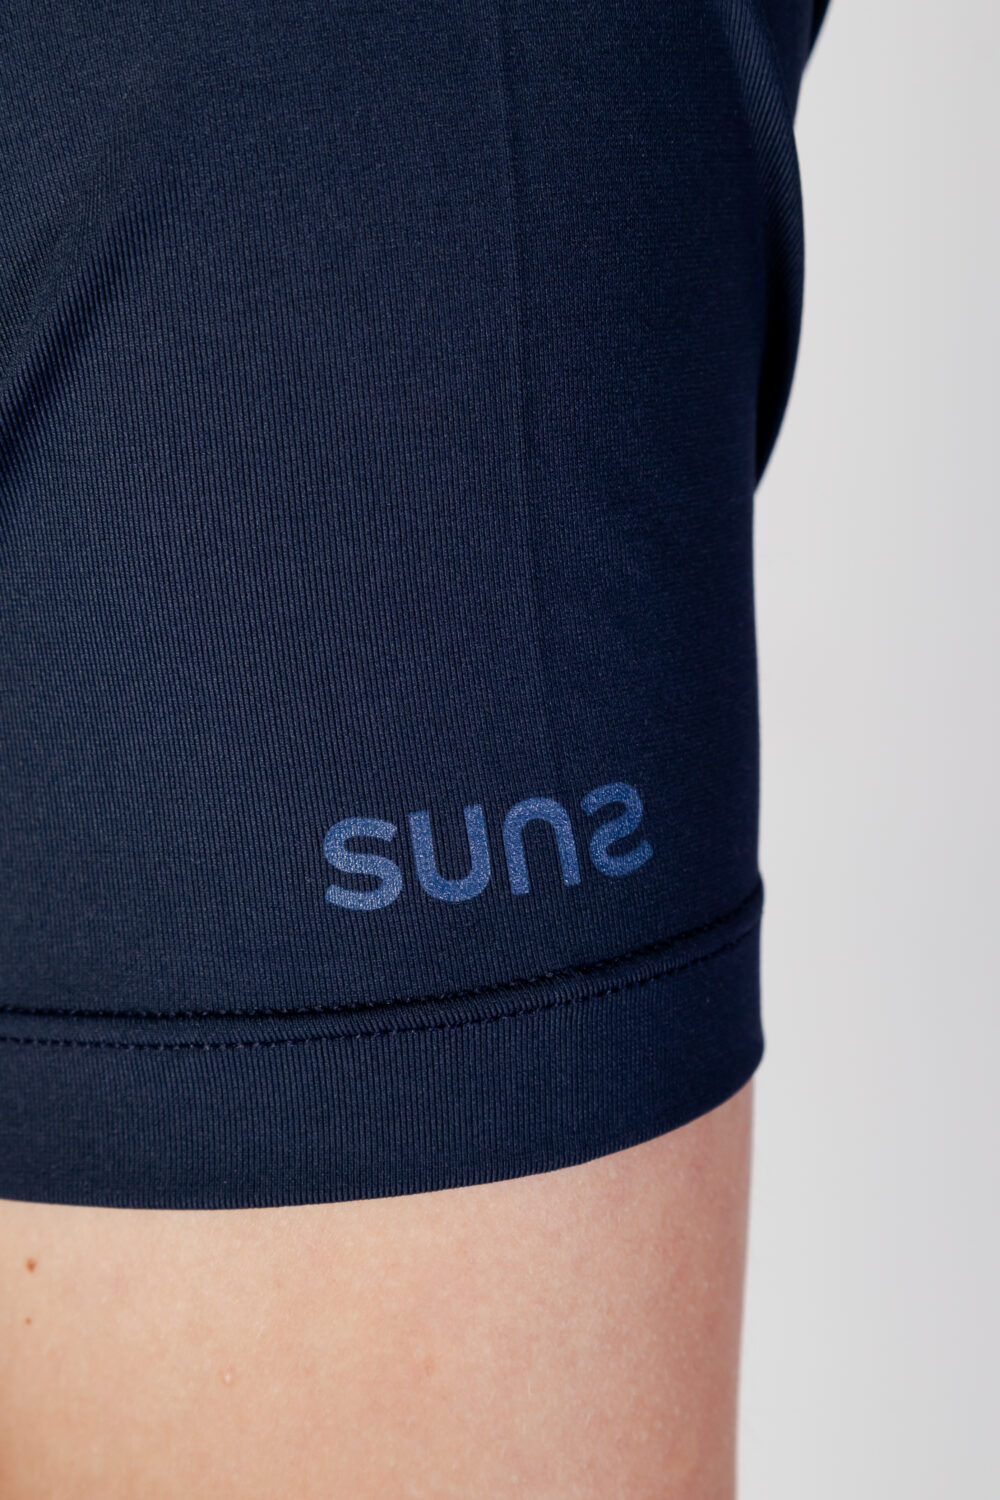 T-shirt Suns paolo lux Blu marine - Foto 2